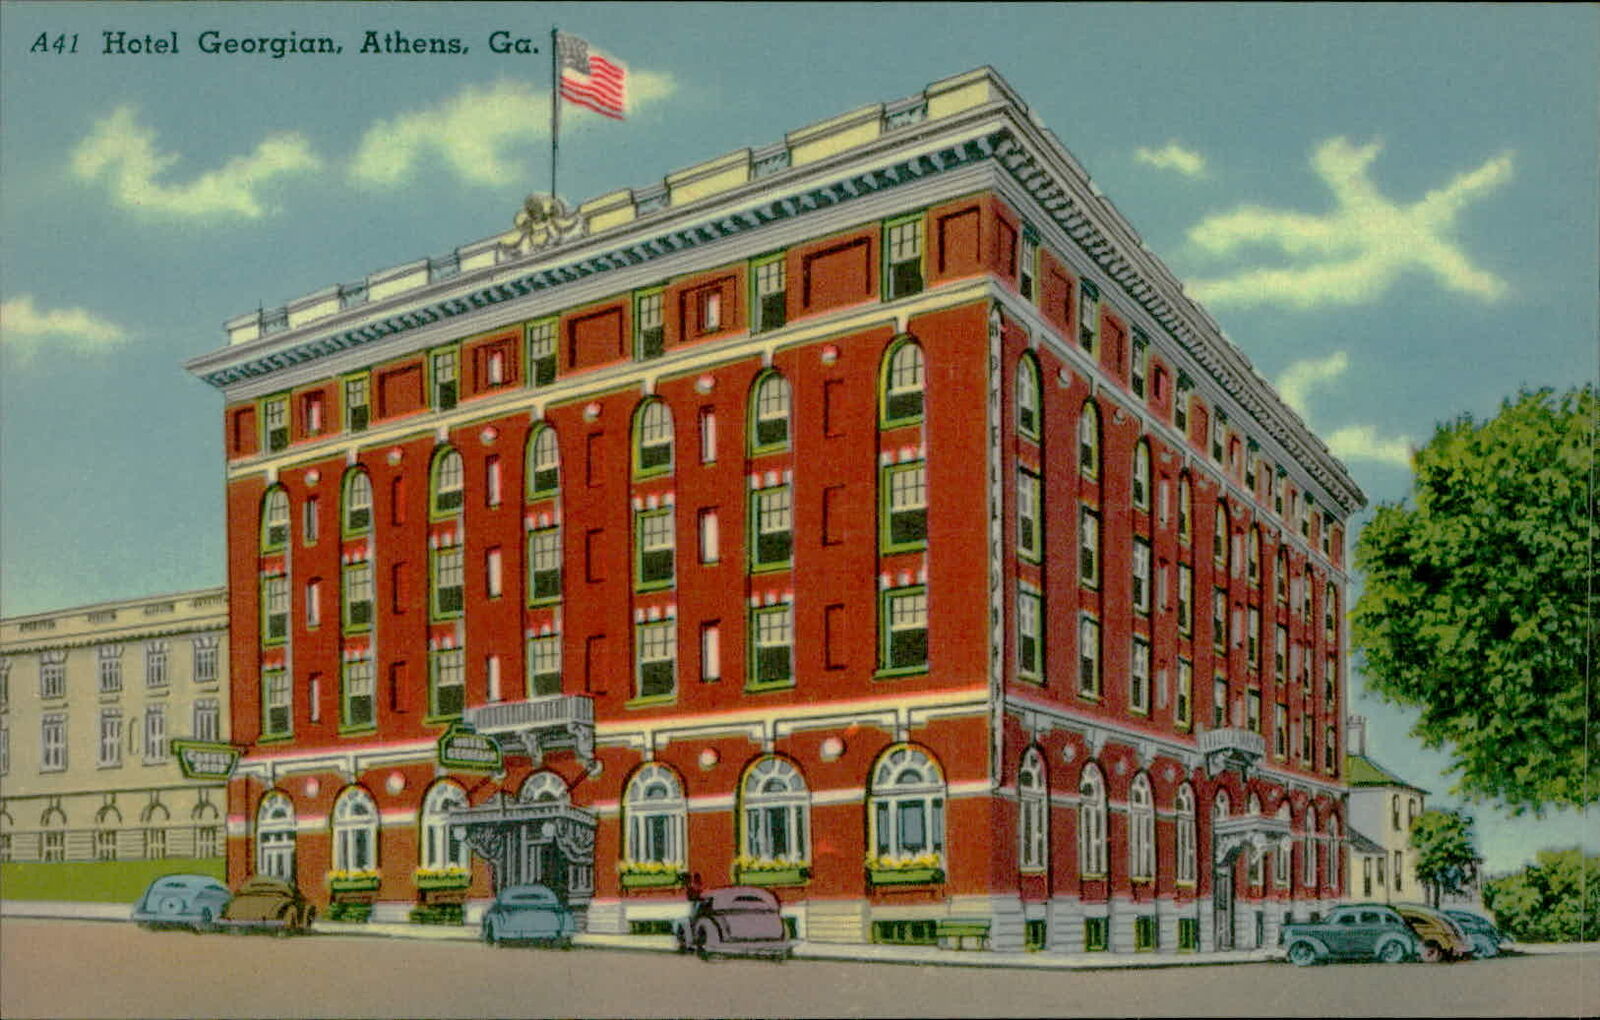 Postcard: A41 Hotel Georgian, Athens, Ga.